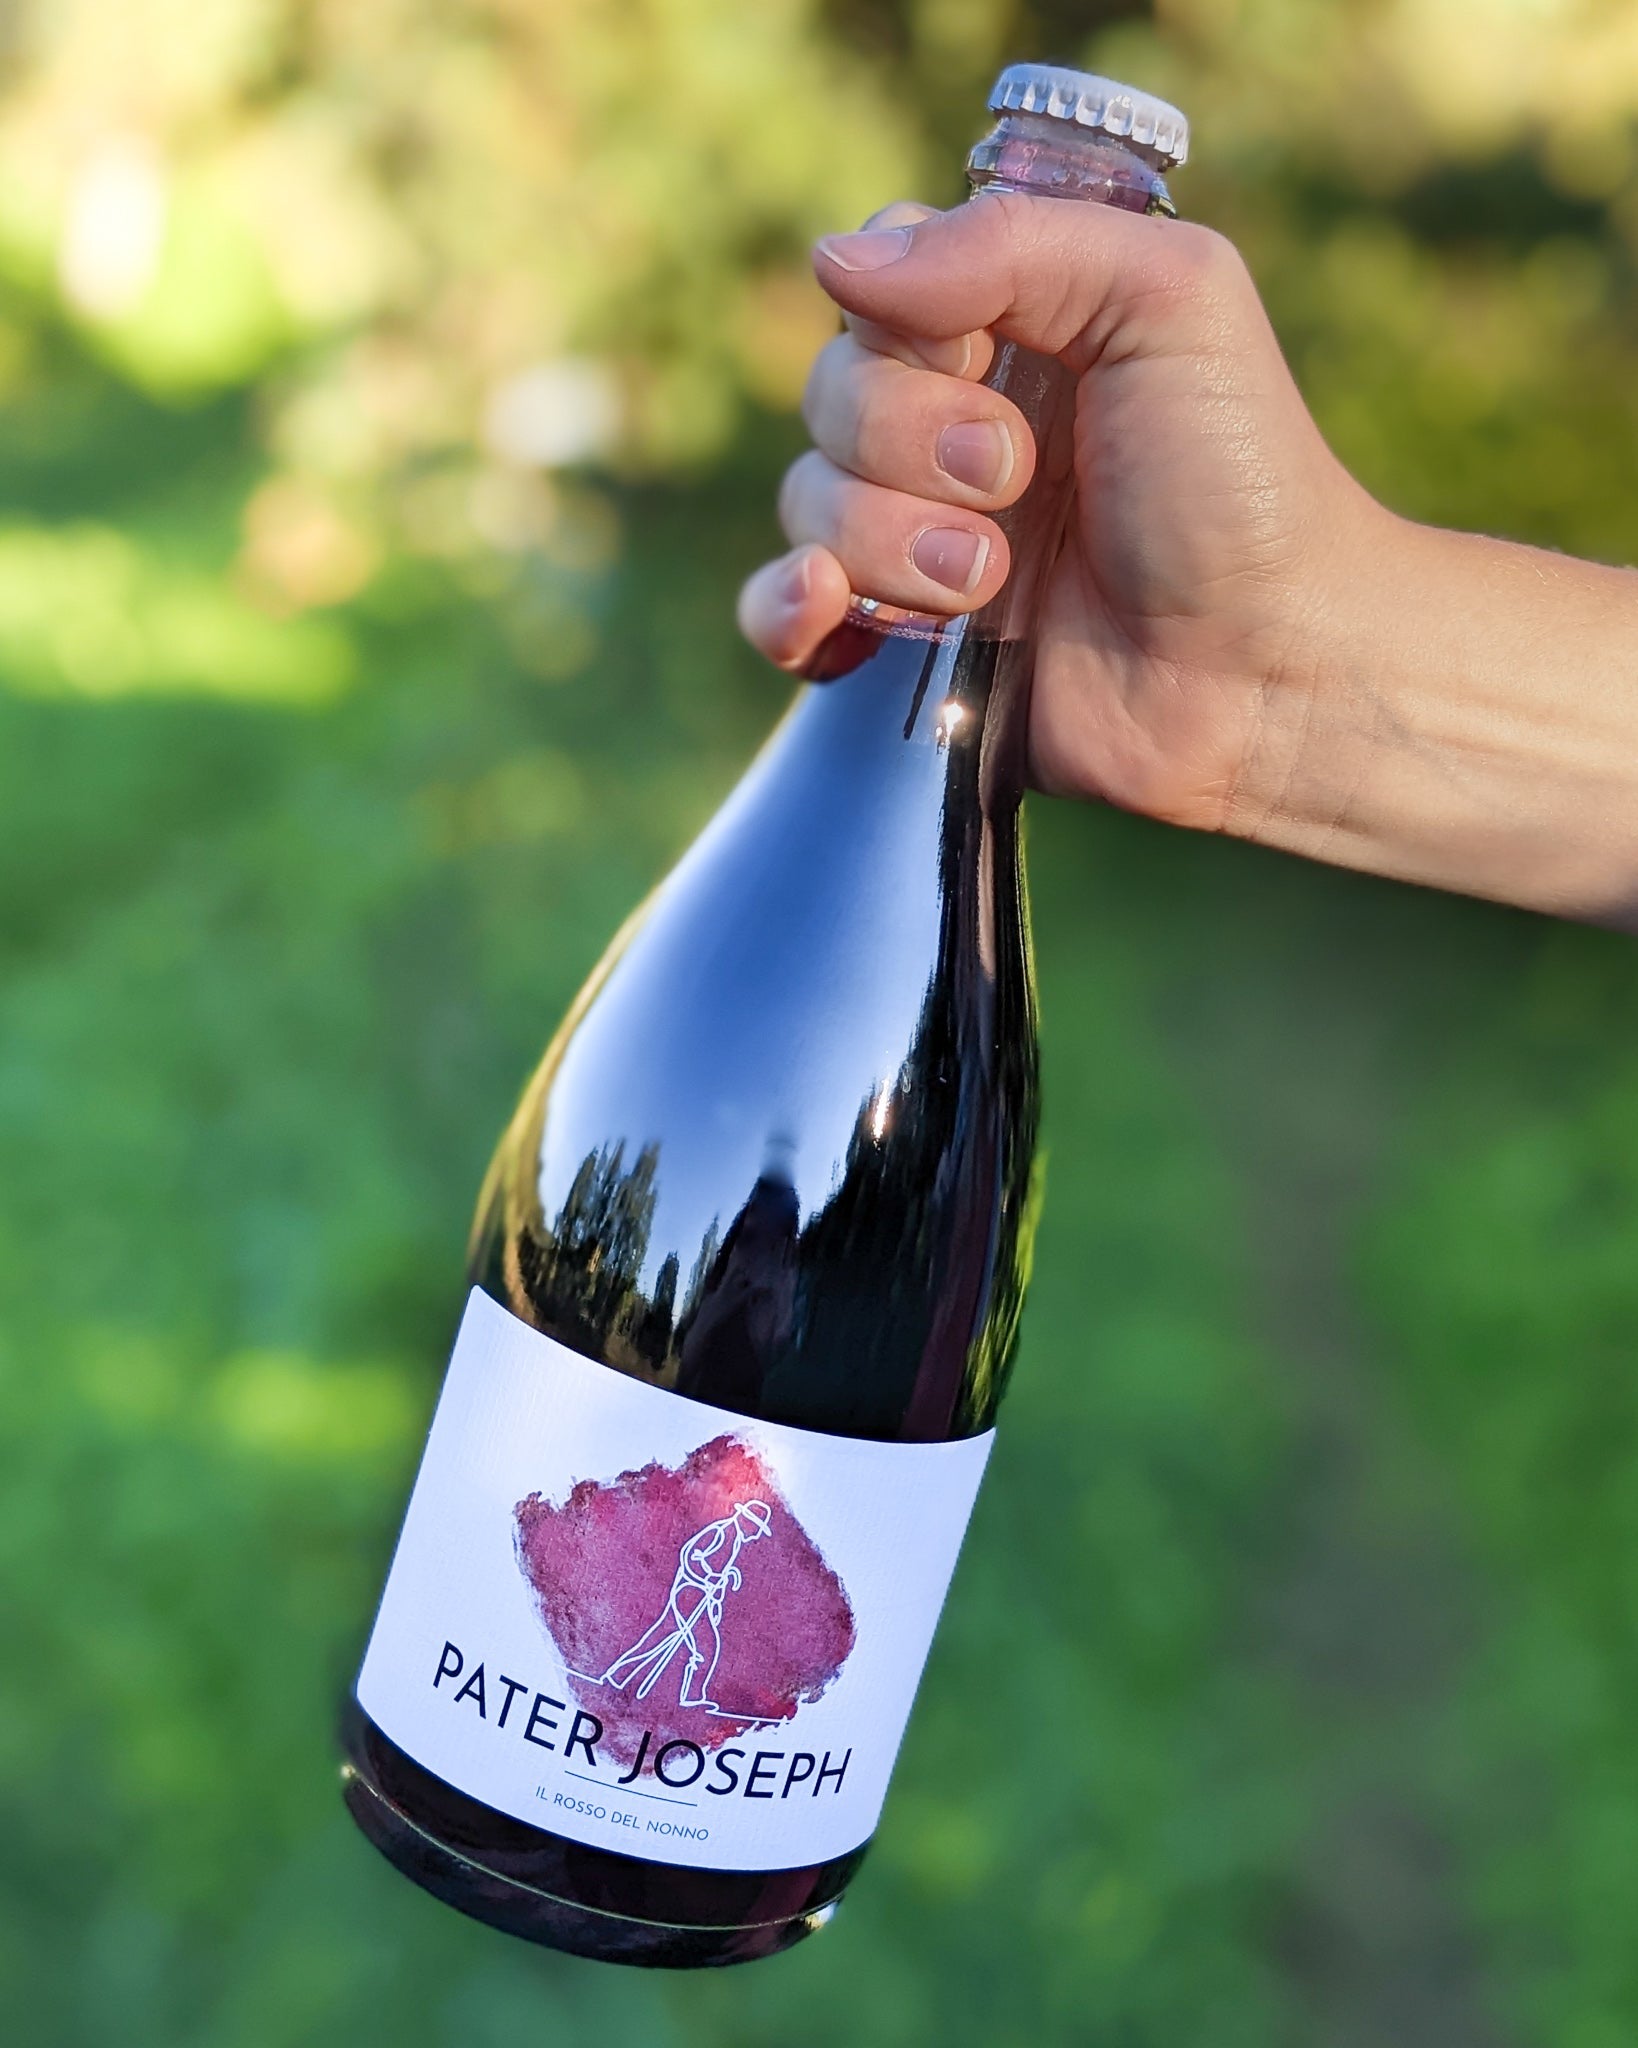 Pater Joseph Pet nat red | Natural sparkling wine